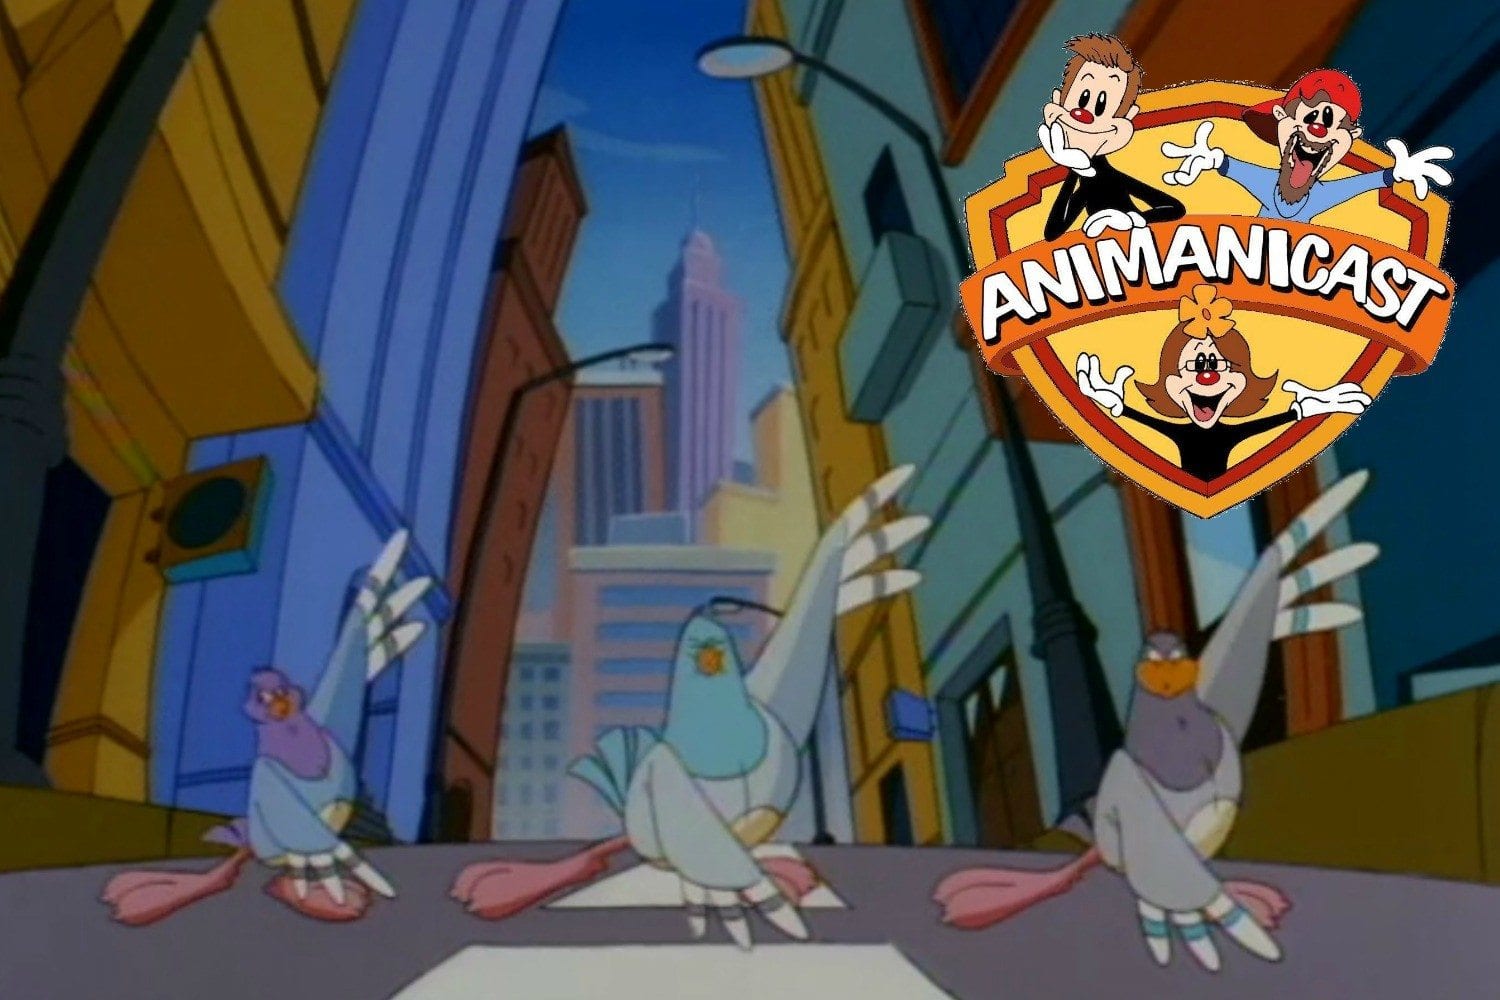 Animan studios by GatedCutoffMeter1705